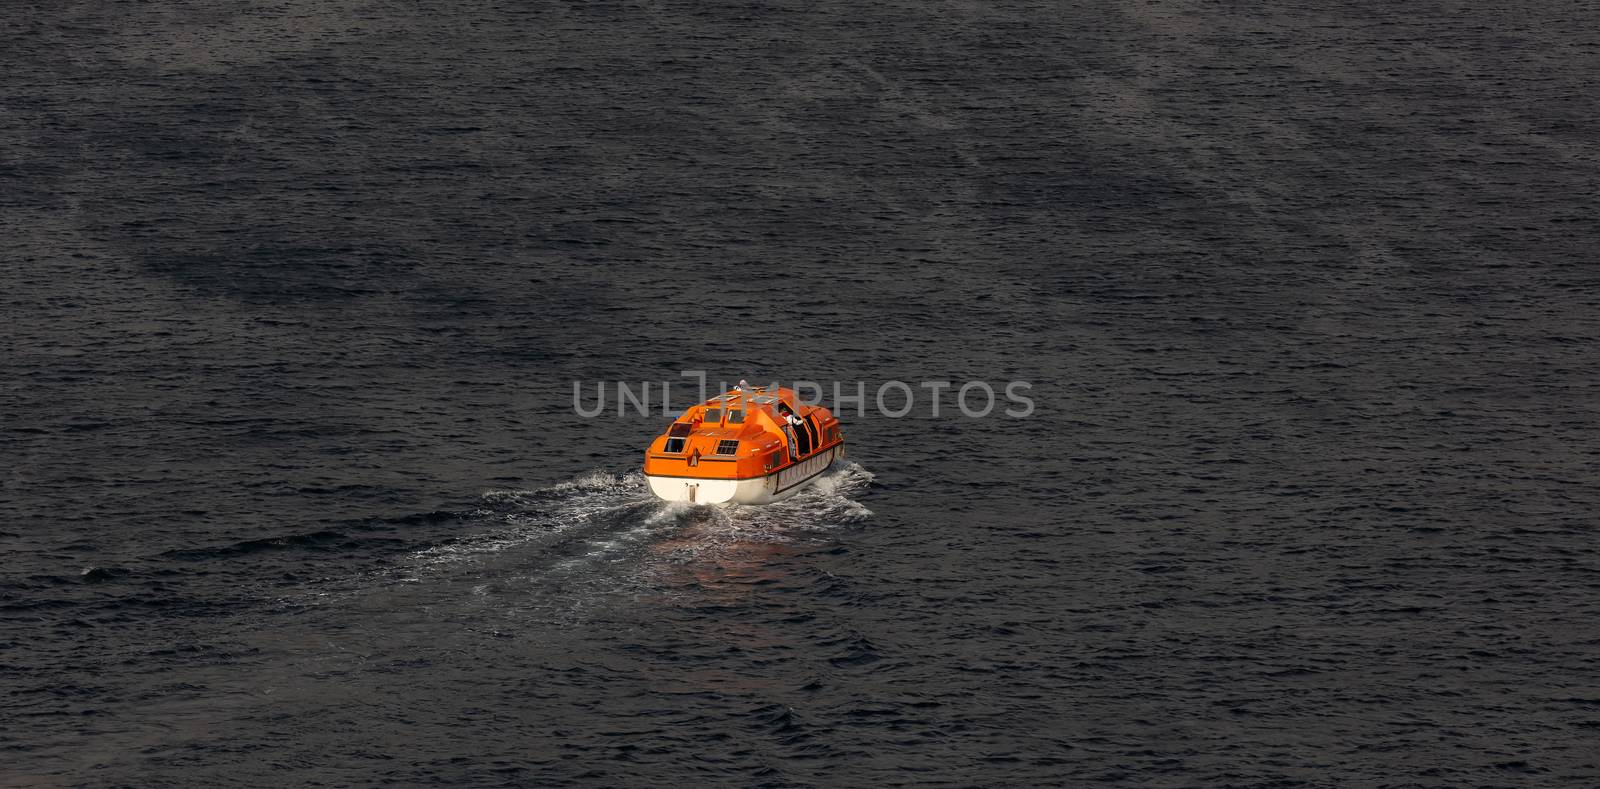 View of a single orange life boat with some seamen inside sailing at sea. Caribbean sea.